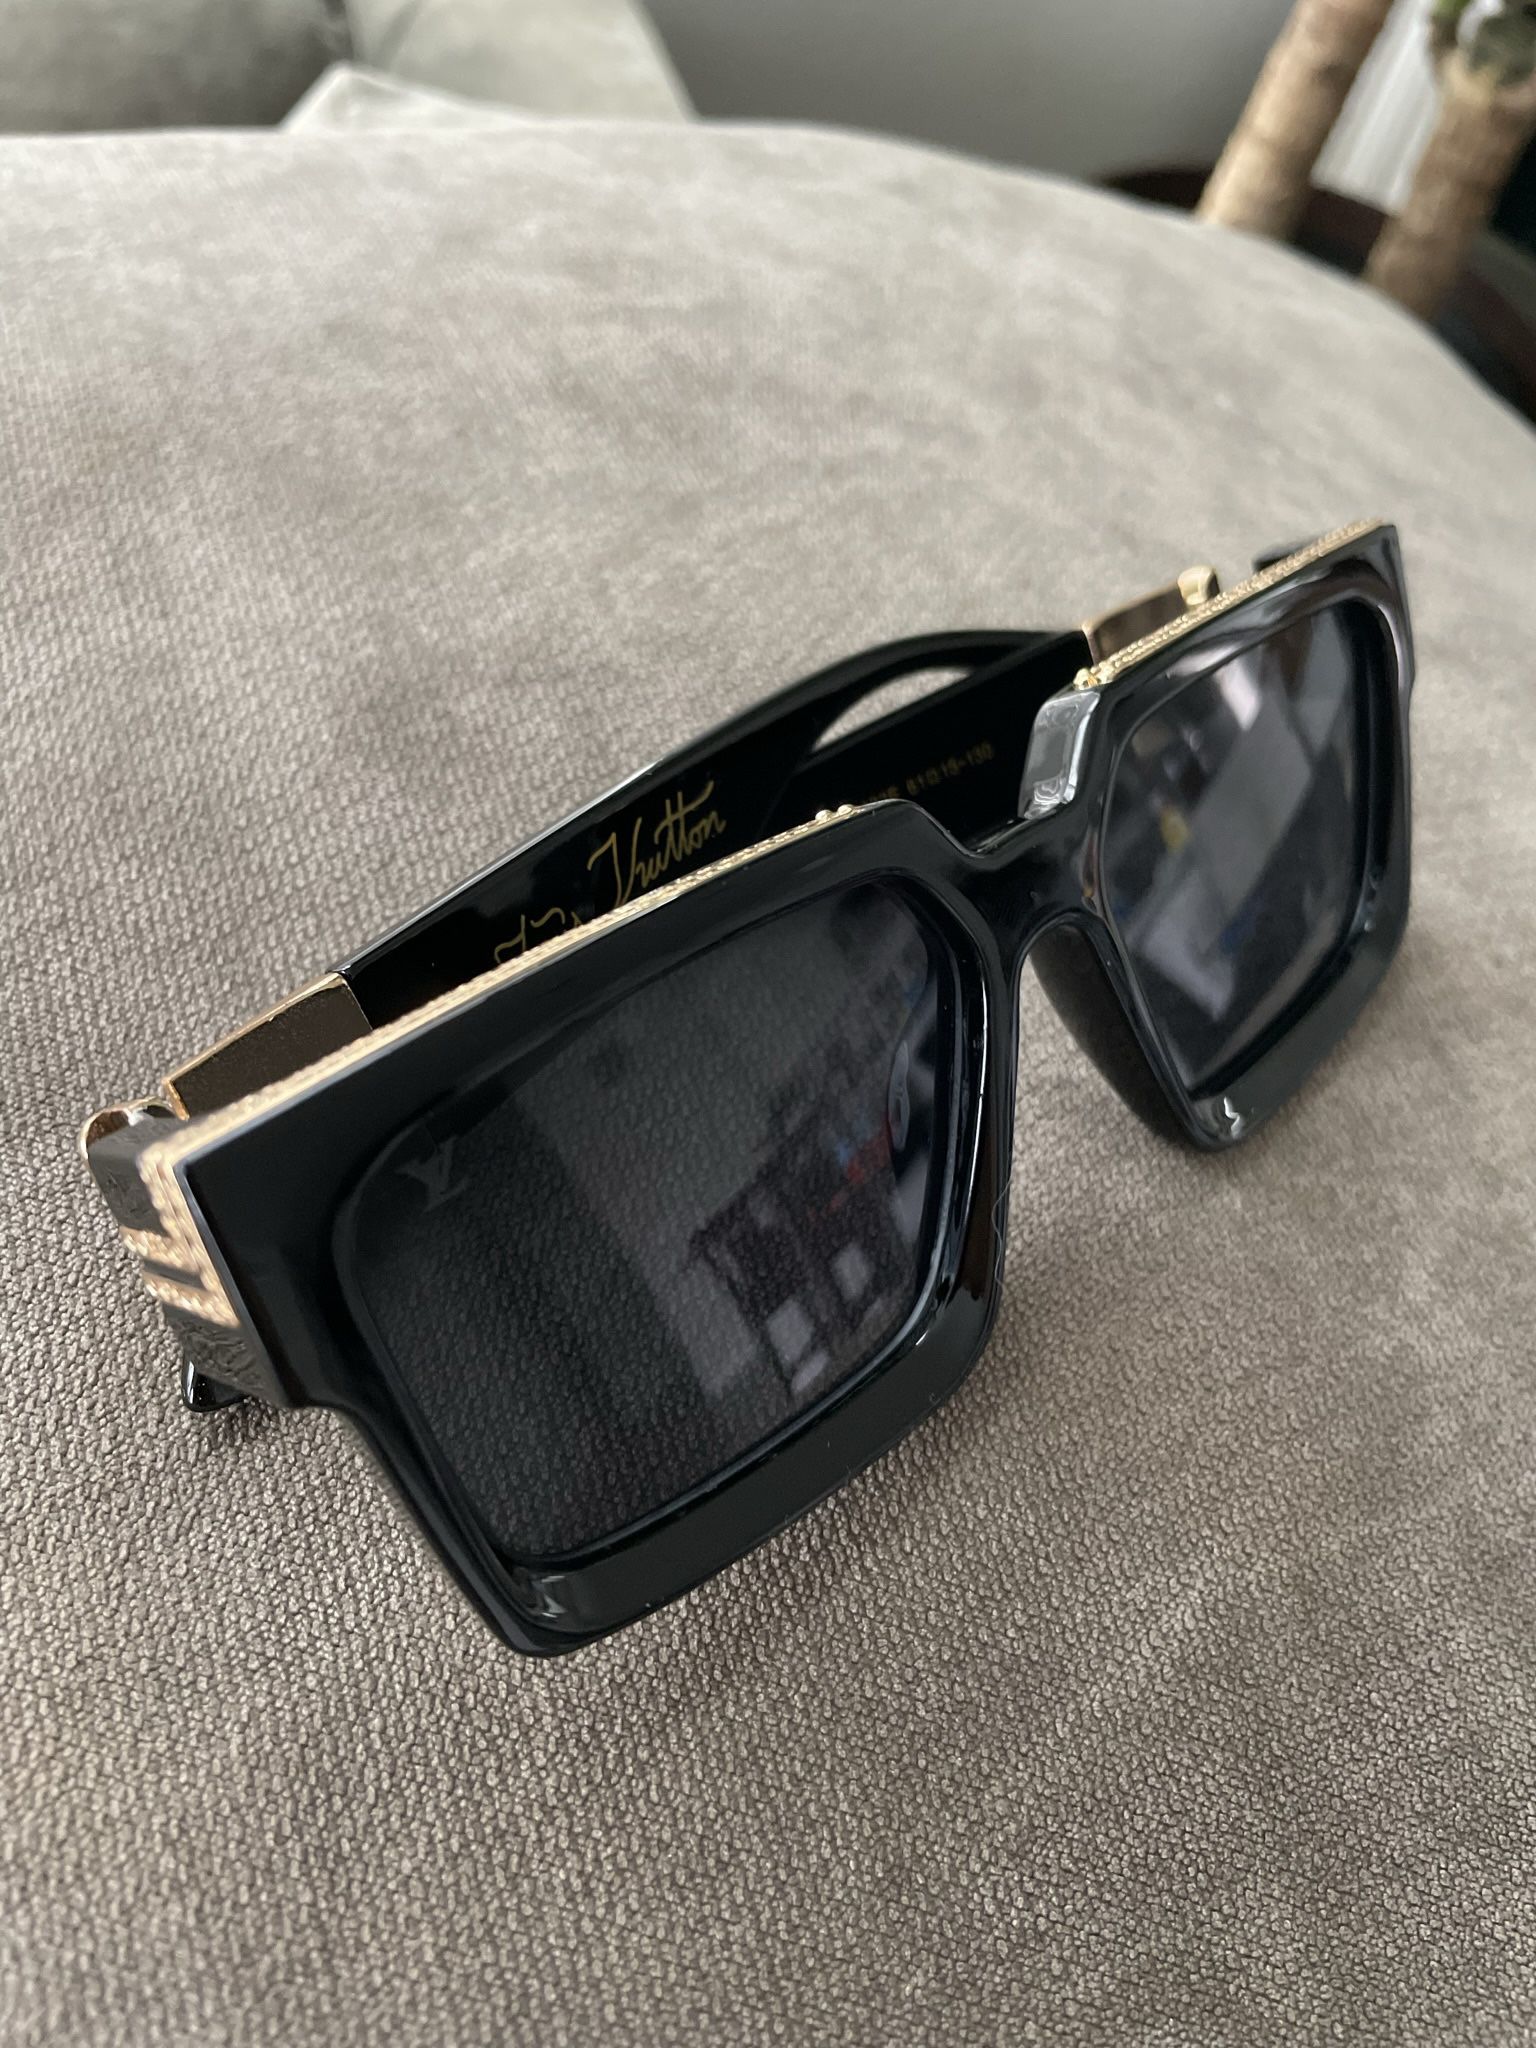 LV Millionaire Sunglasses for Sale in San Antonio, TX - OfferUp